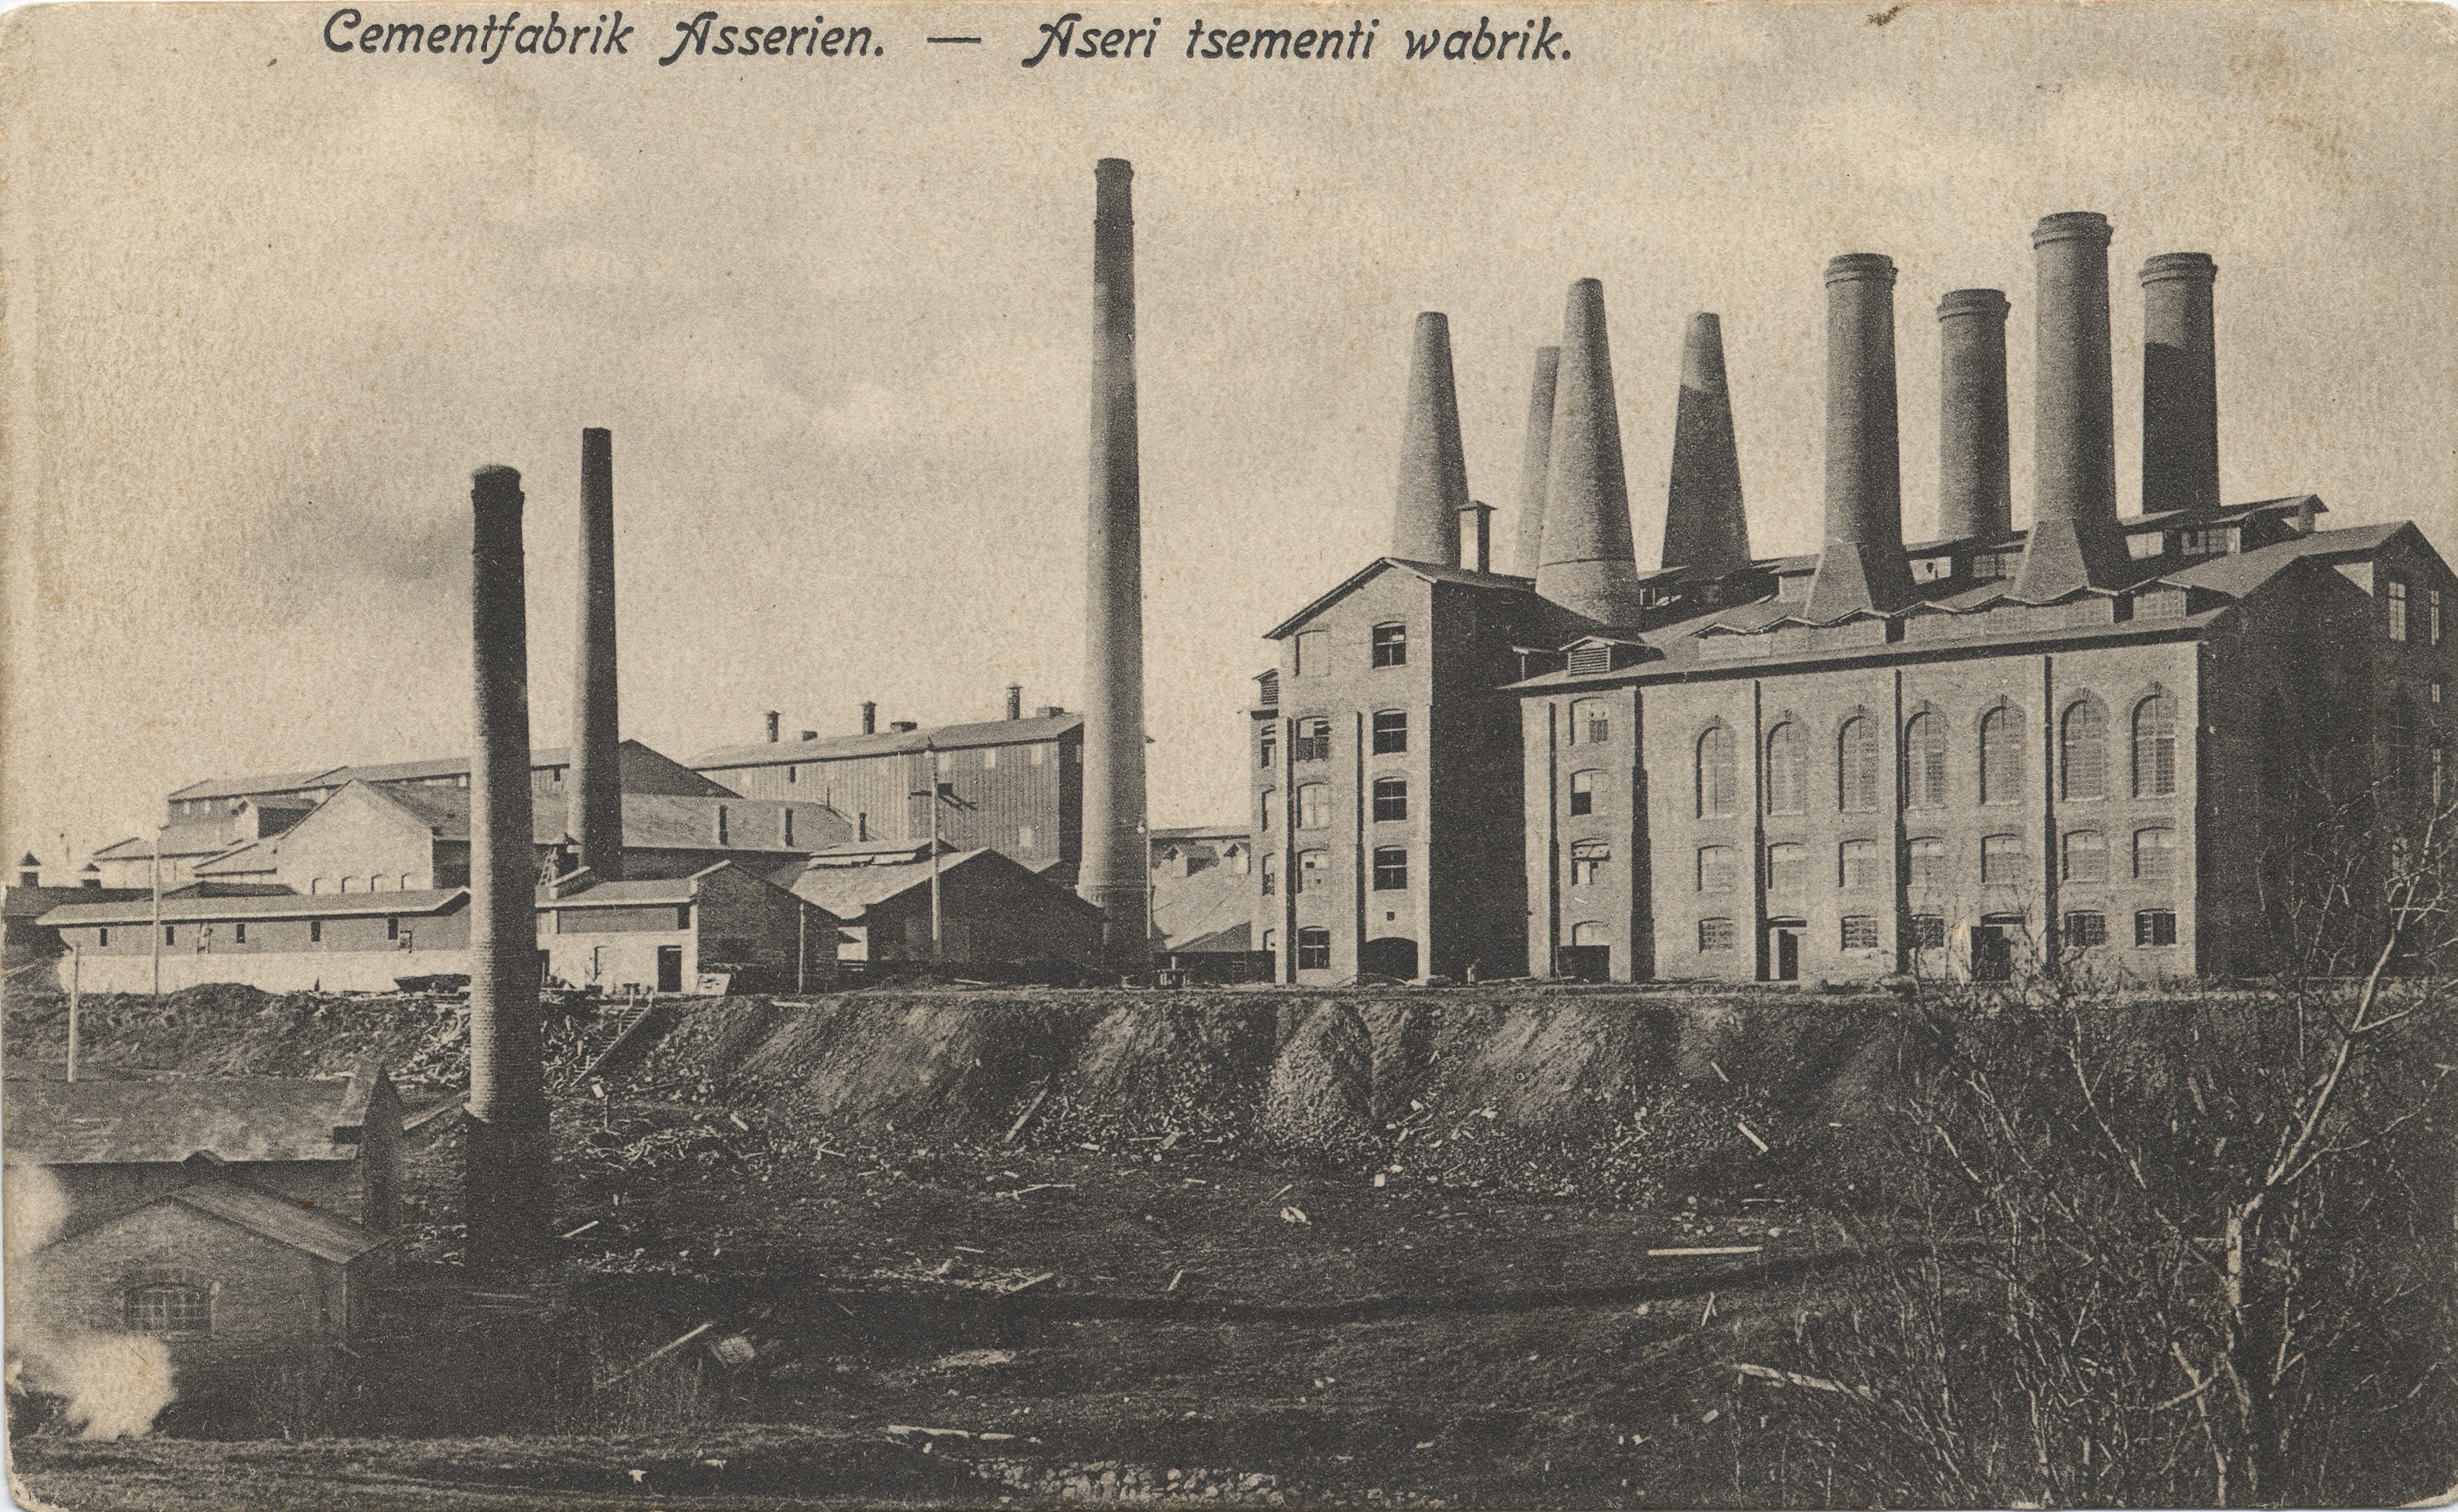 Cementfabrik Asserien : Aseri cement wabrik